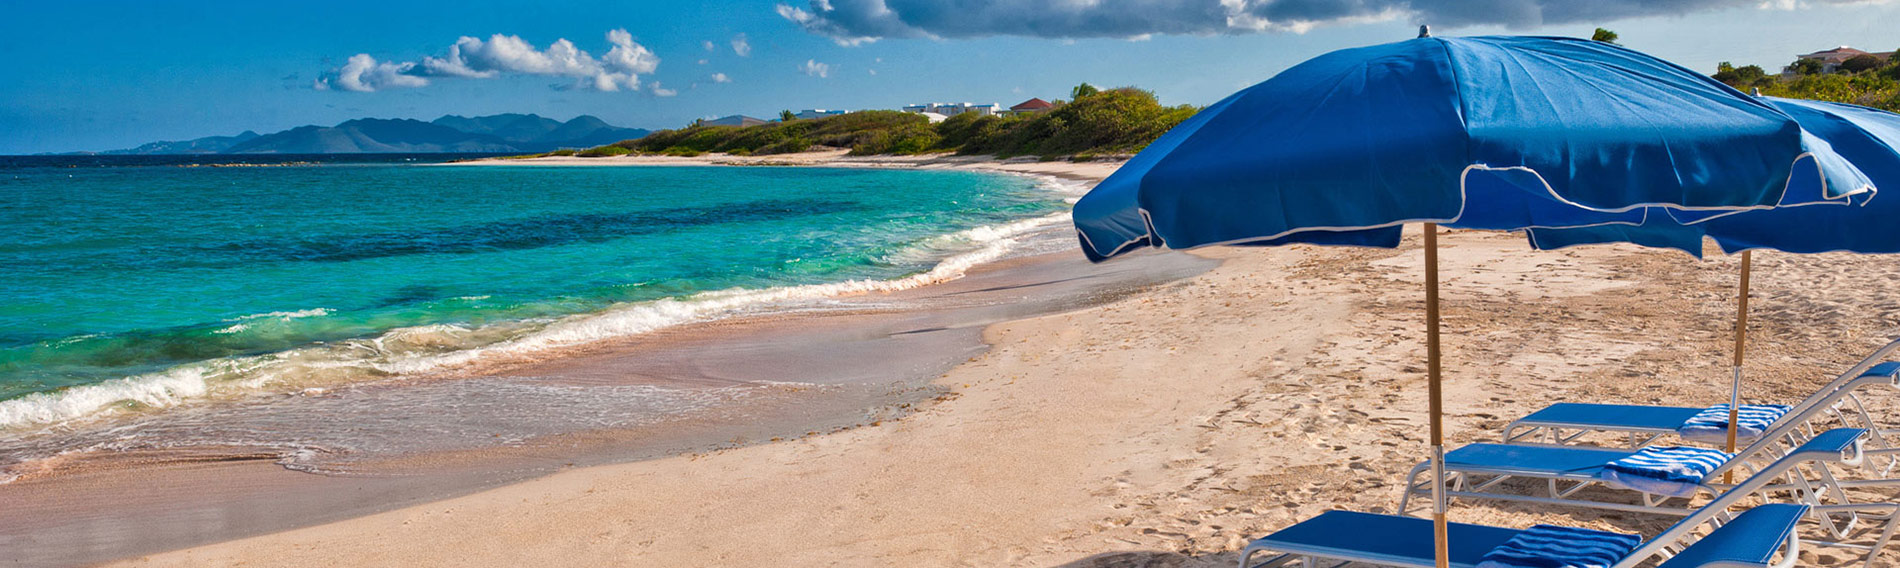 Peaceful Sandy Hill Bay Beach, Anguilla